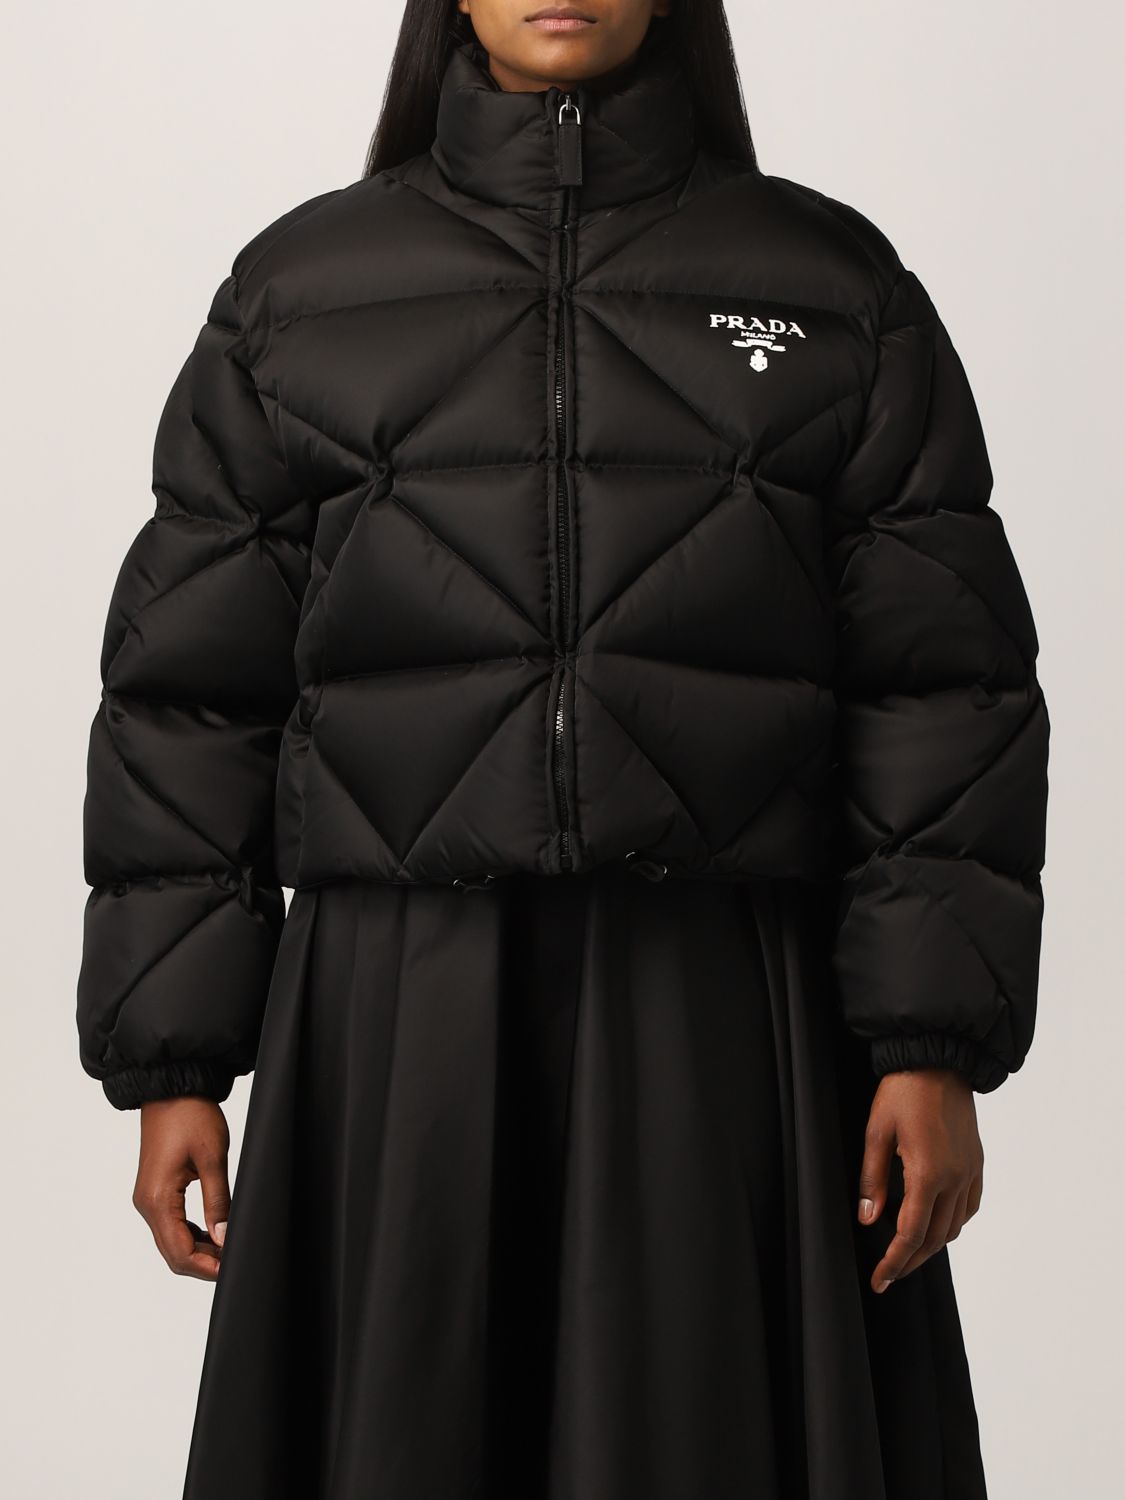 PRADA: down jacket in cropped nylon - Black | Prada jacket 291947 1WQ8 ...